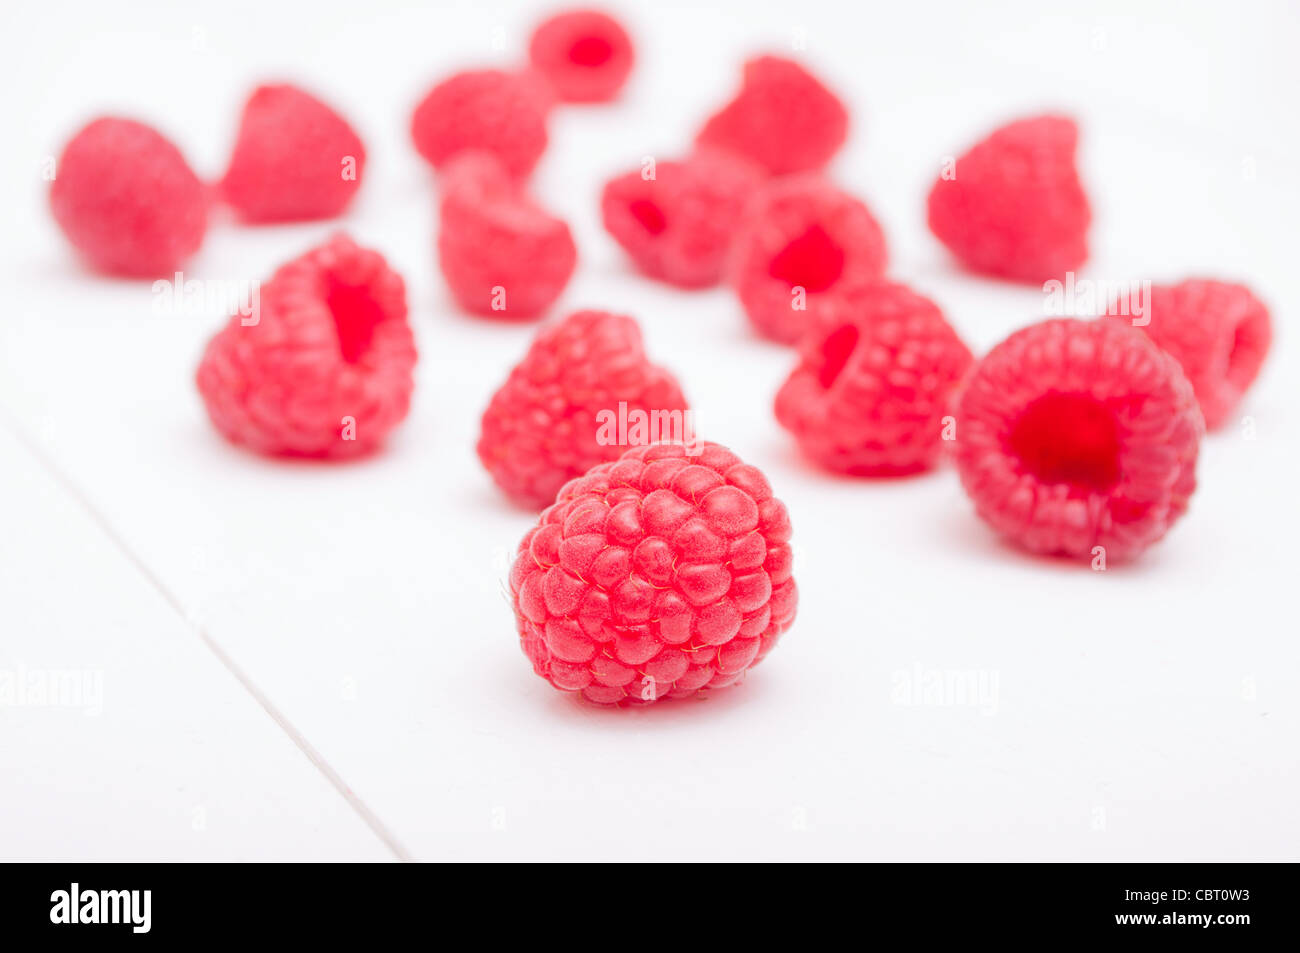 Fresh Ripe Raspberries on White Wooden Table Stock Photo